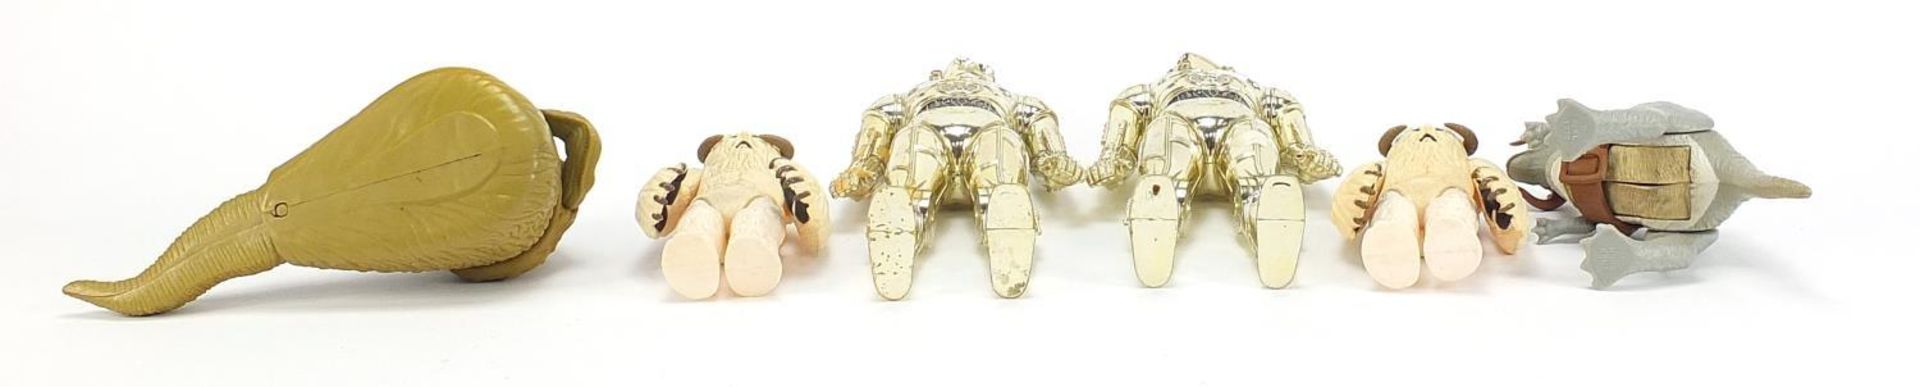 Six large vintage Star Wars action figures including two gold C-3PO, 31.5cm high : - Bild 5 aus 6